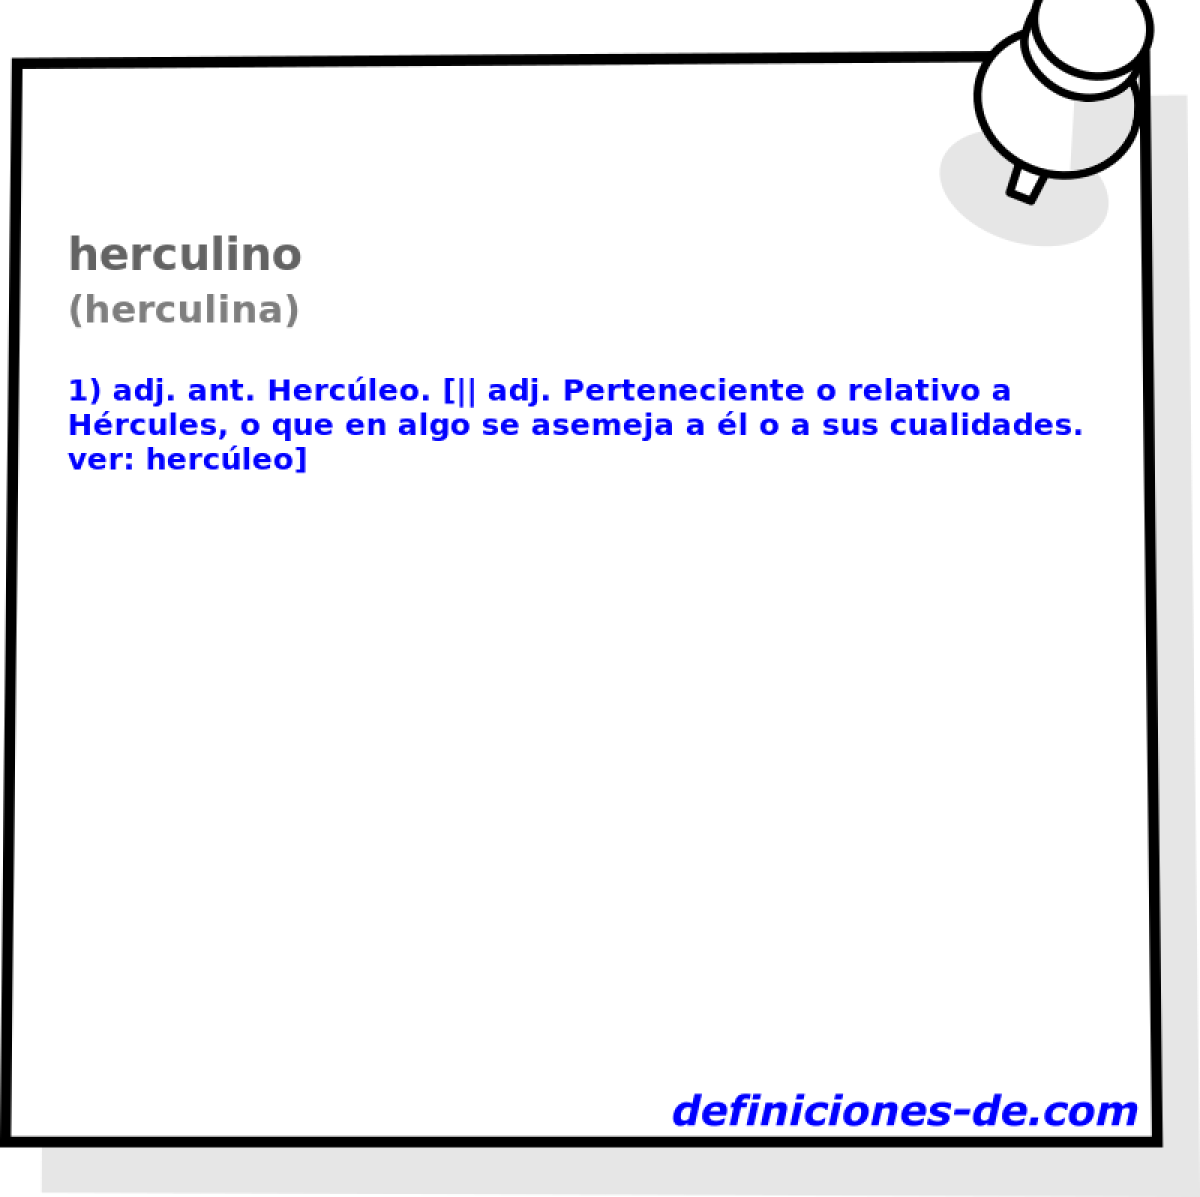 herculino (herculina)